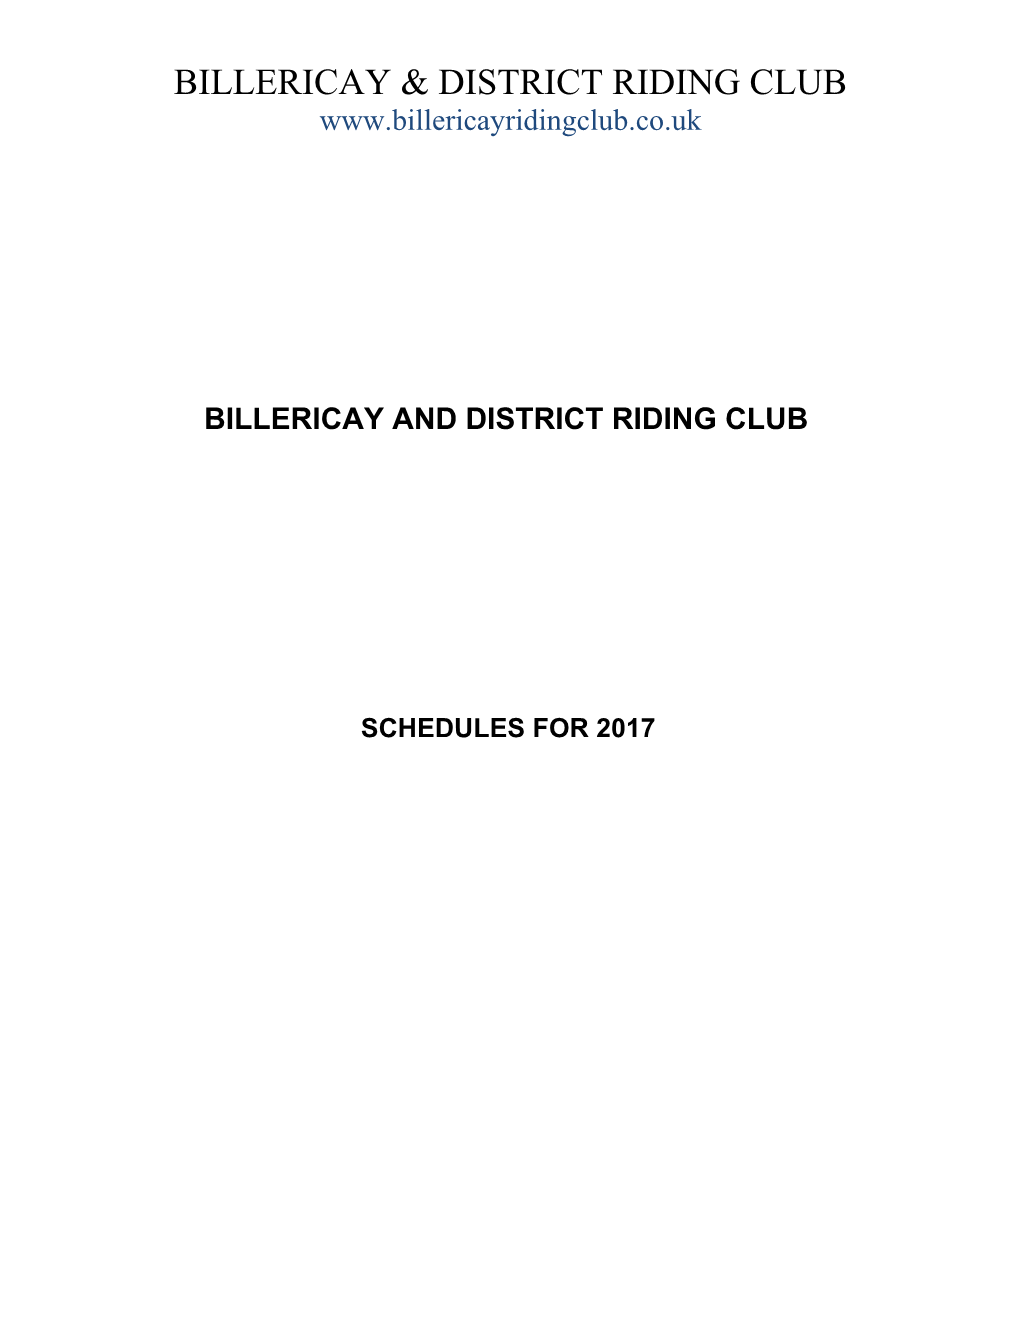 Billericay & District Riding Club